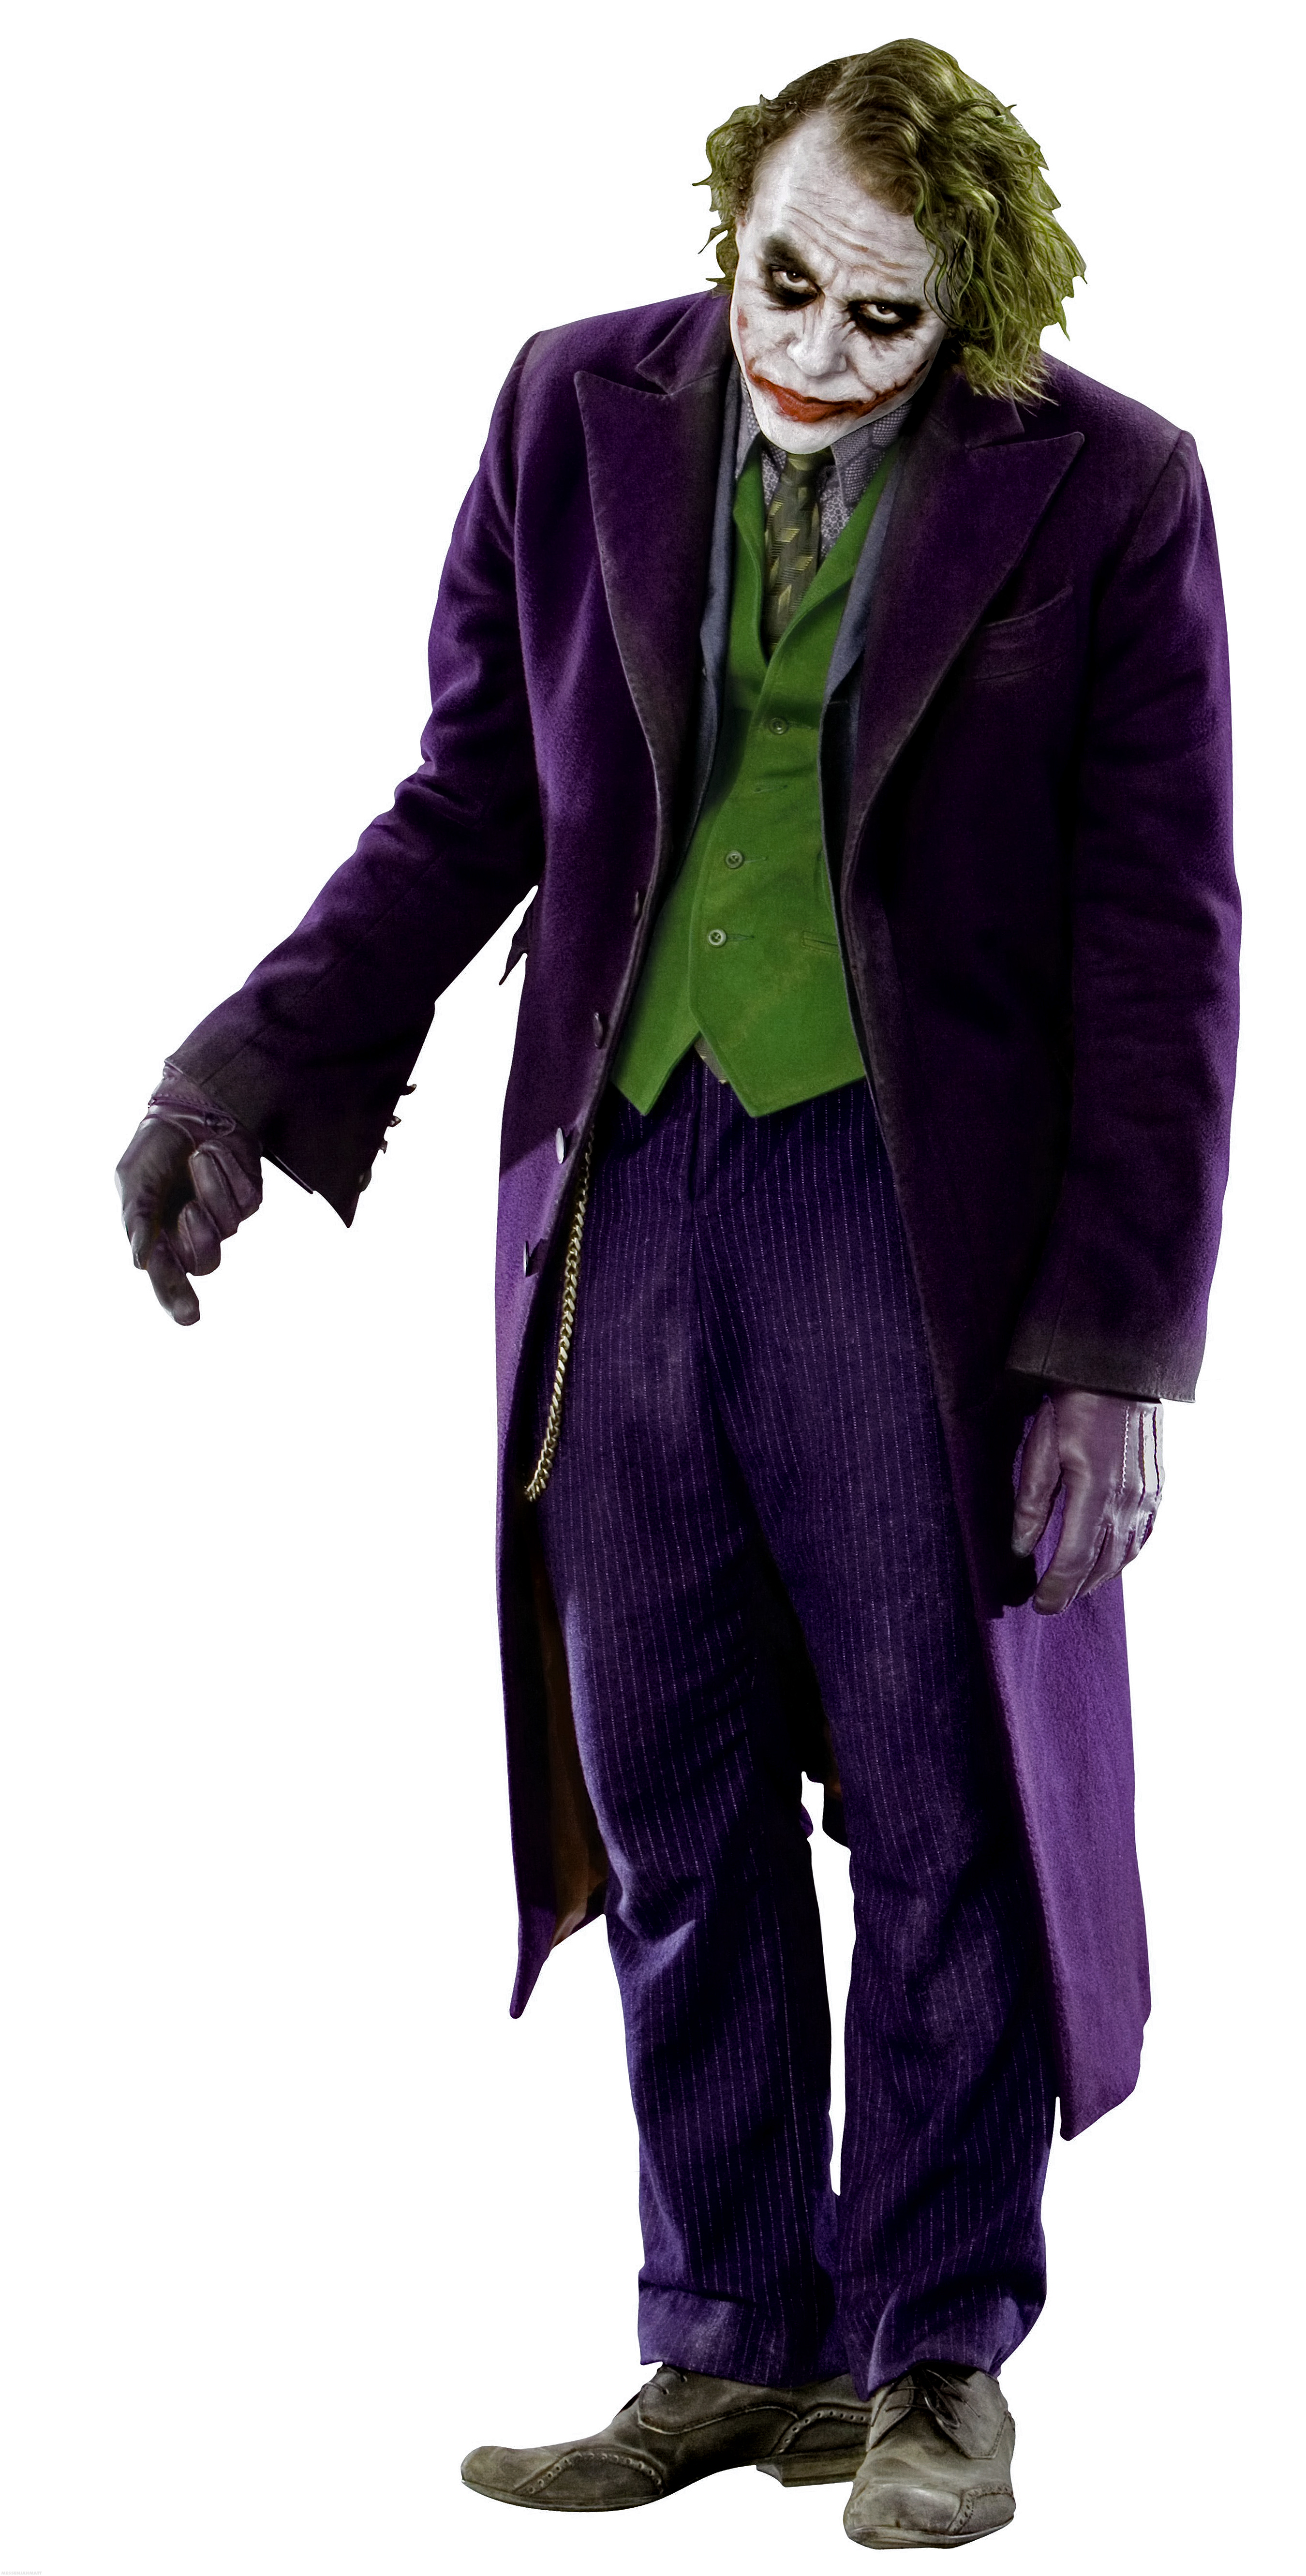 Image - Pressshot Joker.jpg - Batman Wiki